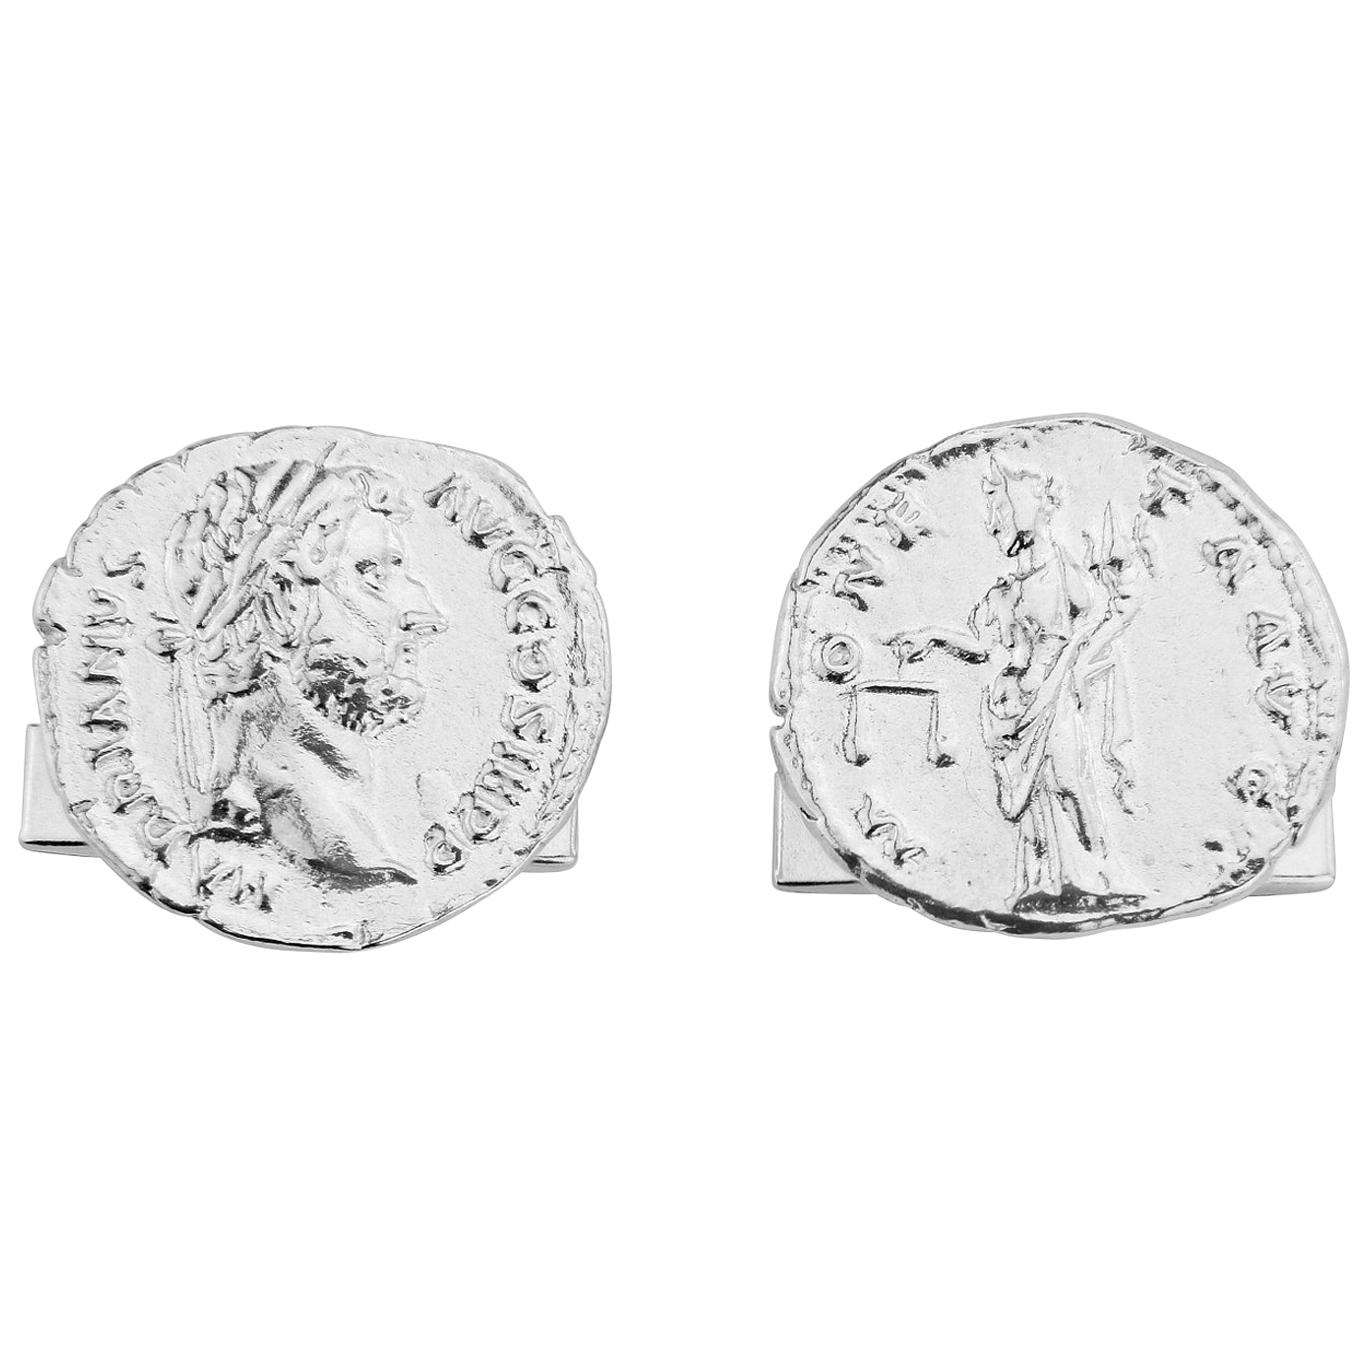 Emperor Hadrian Cufflinks in Sterling Silver For Sale